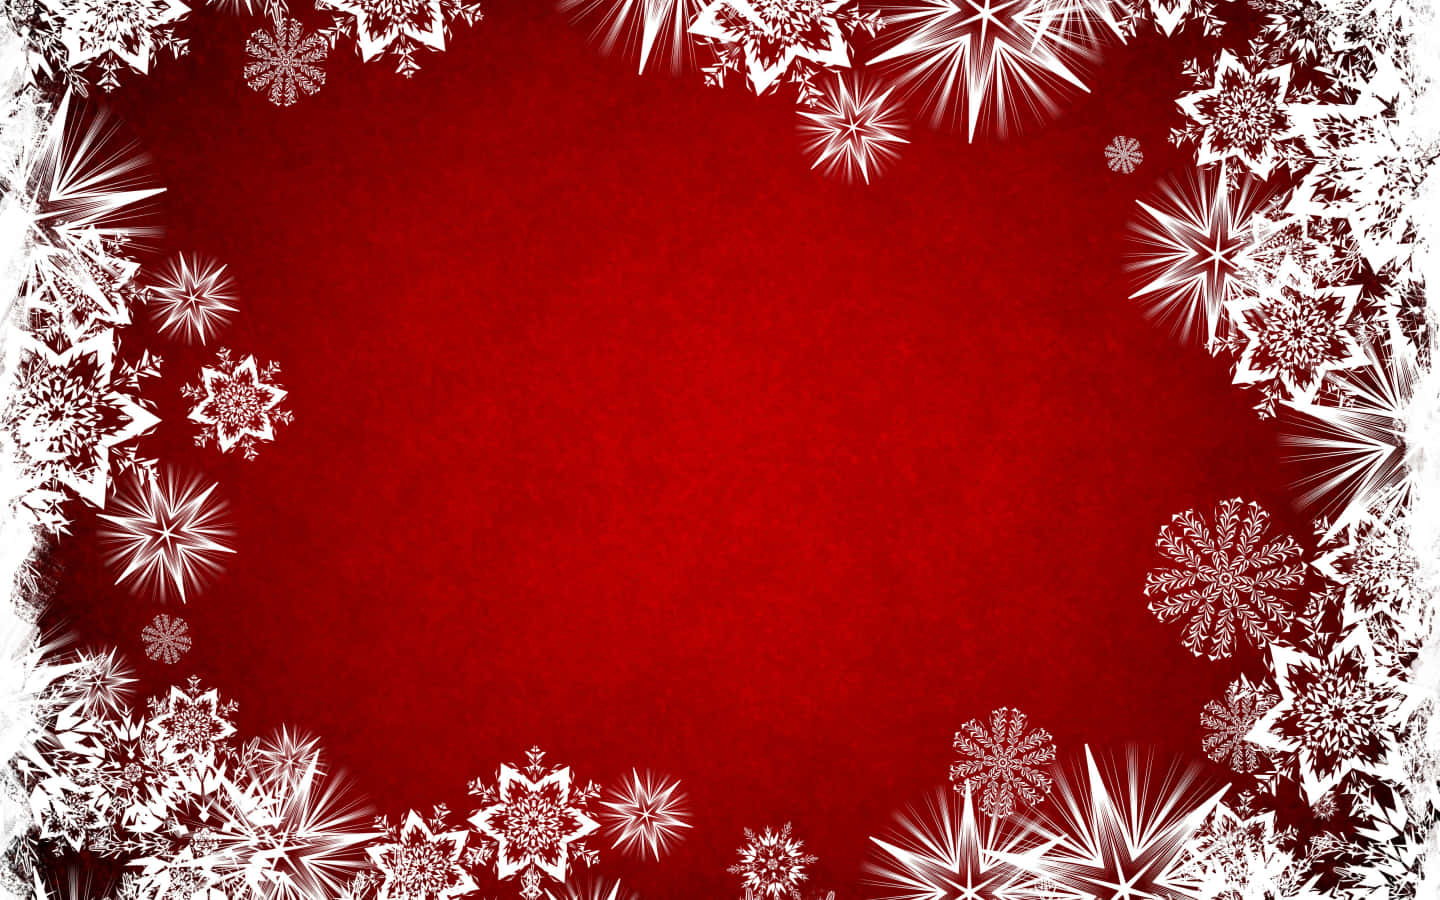 Julbakgrundmed Snöflingor På Röd Bakgrund